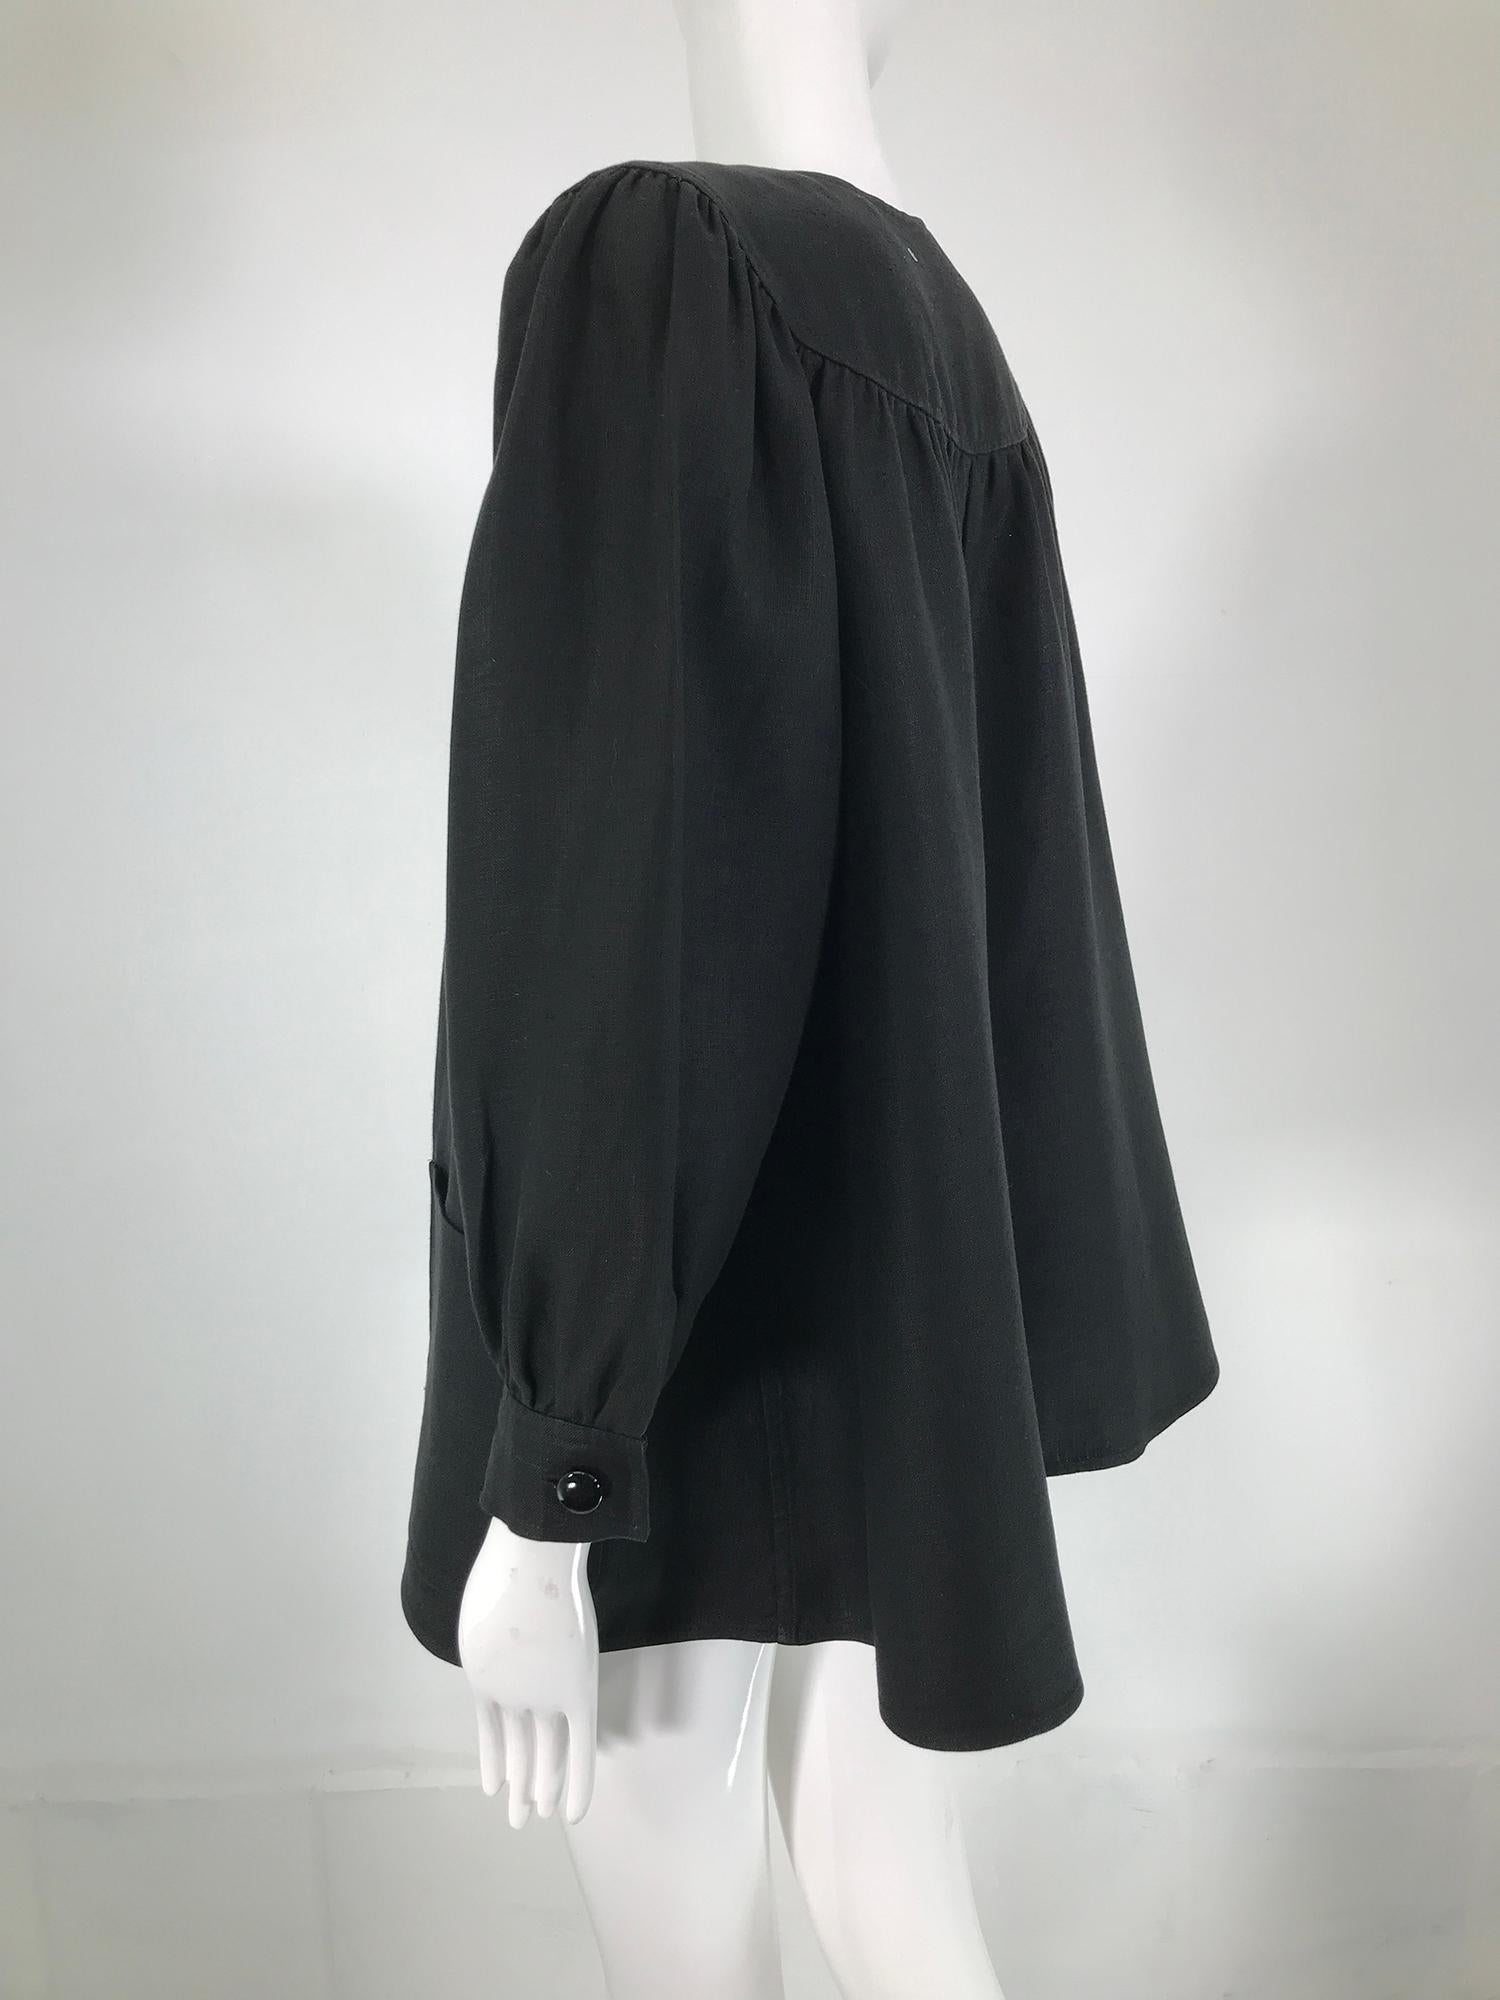 Oscar de la Renta Black Linen Button Front Full Sleeve Hip Pocket Jacket 1980s For Sale 8